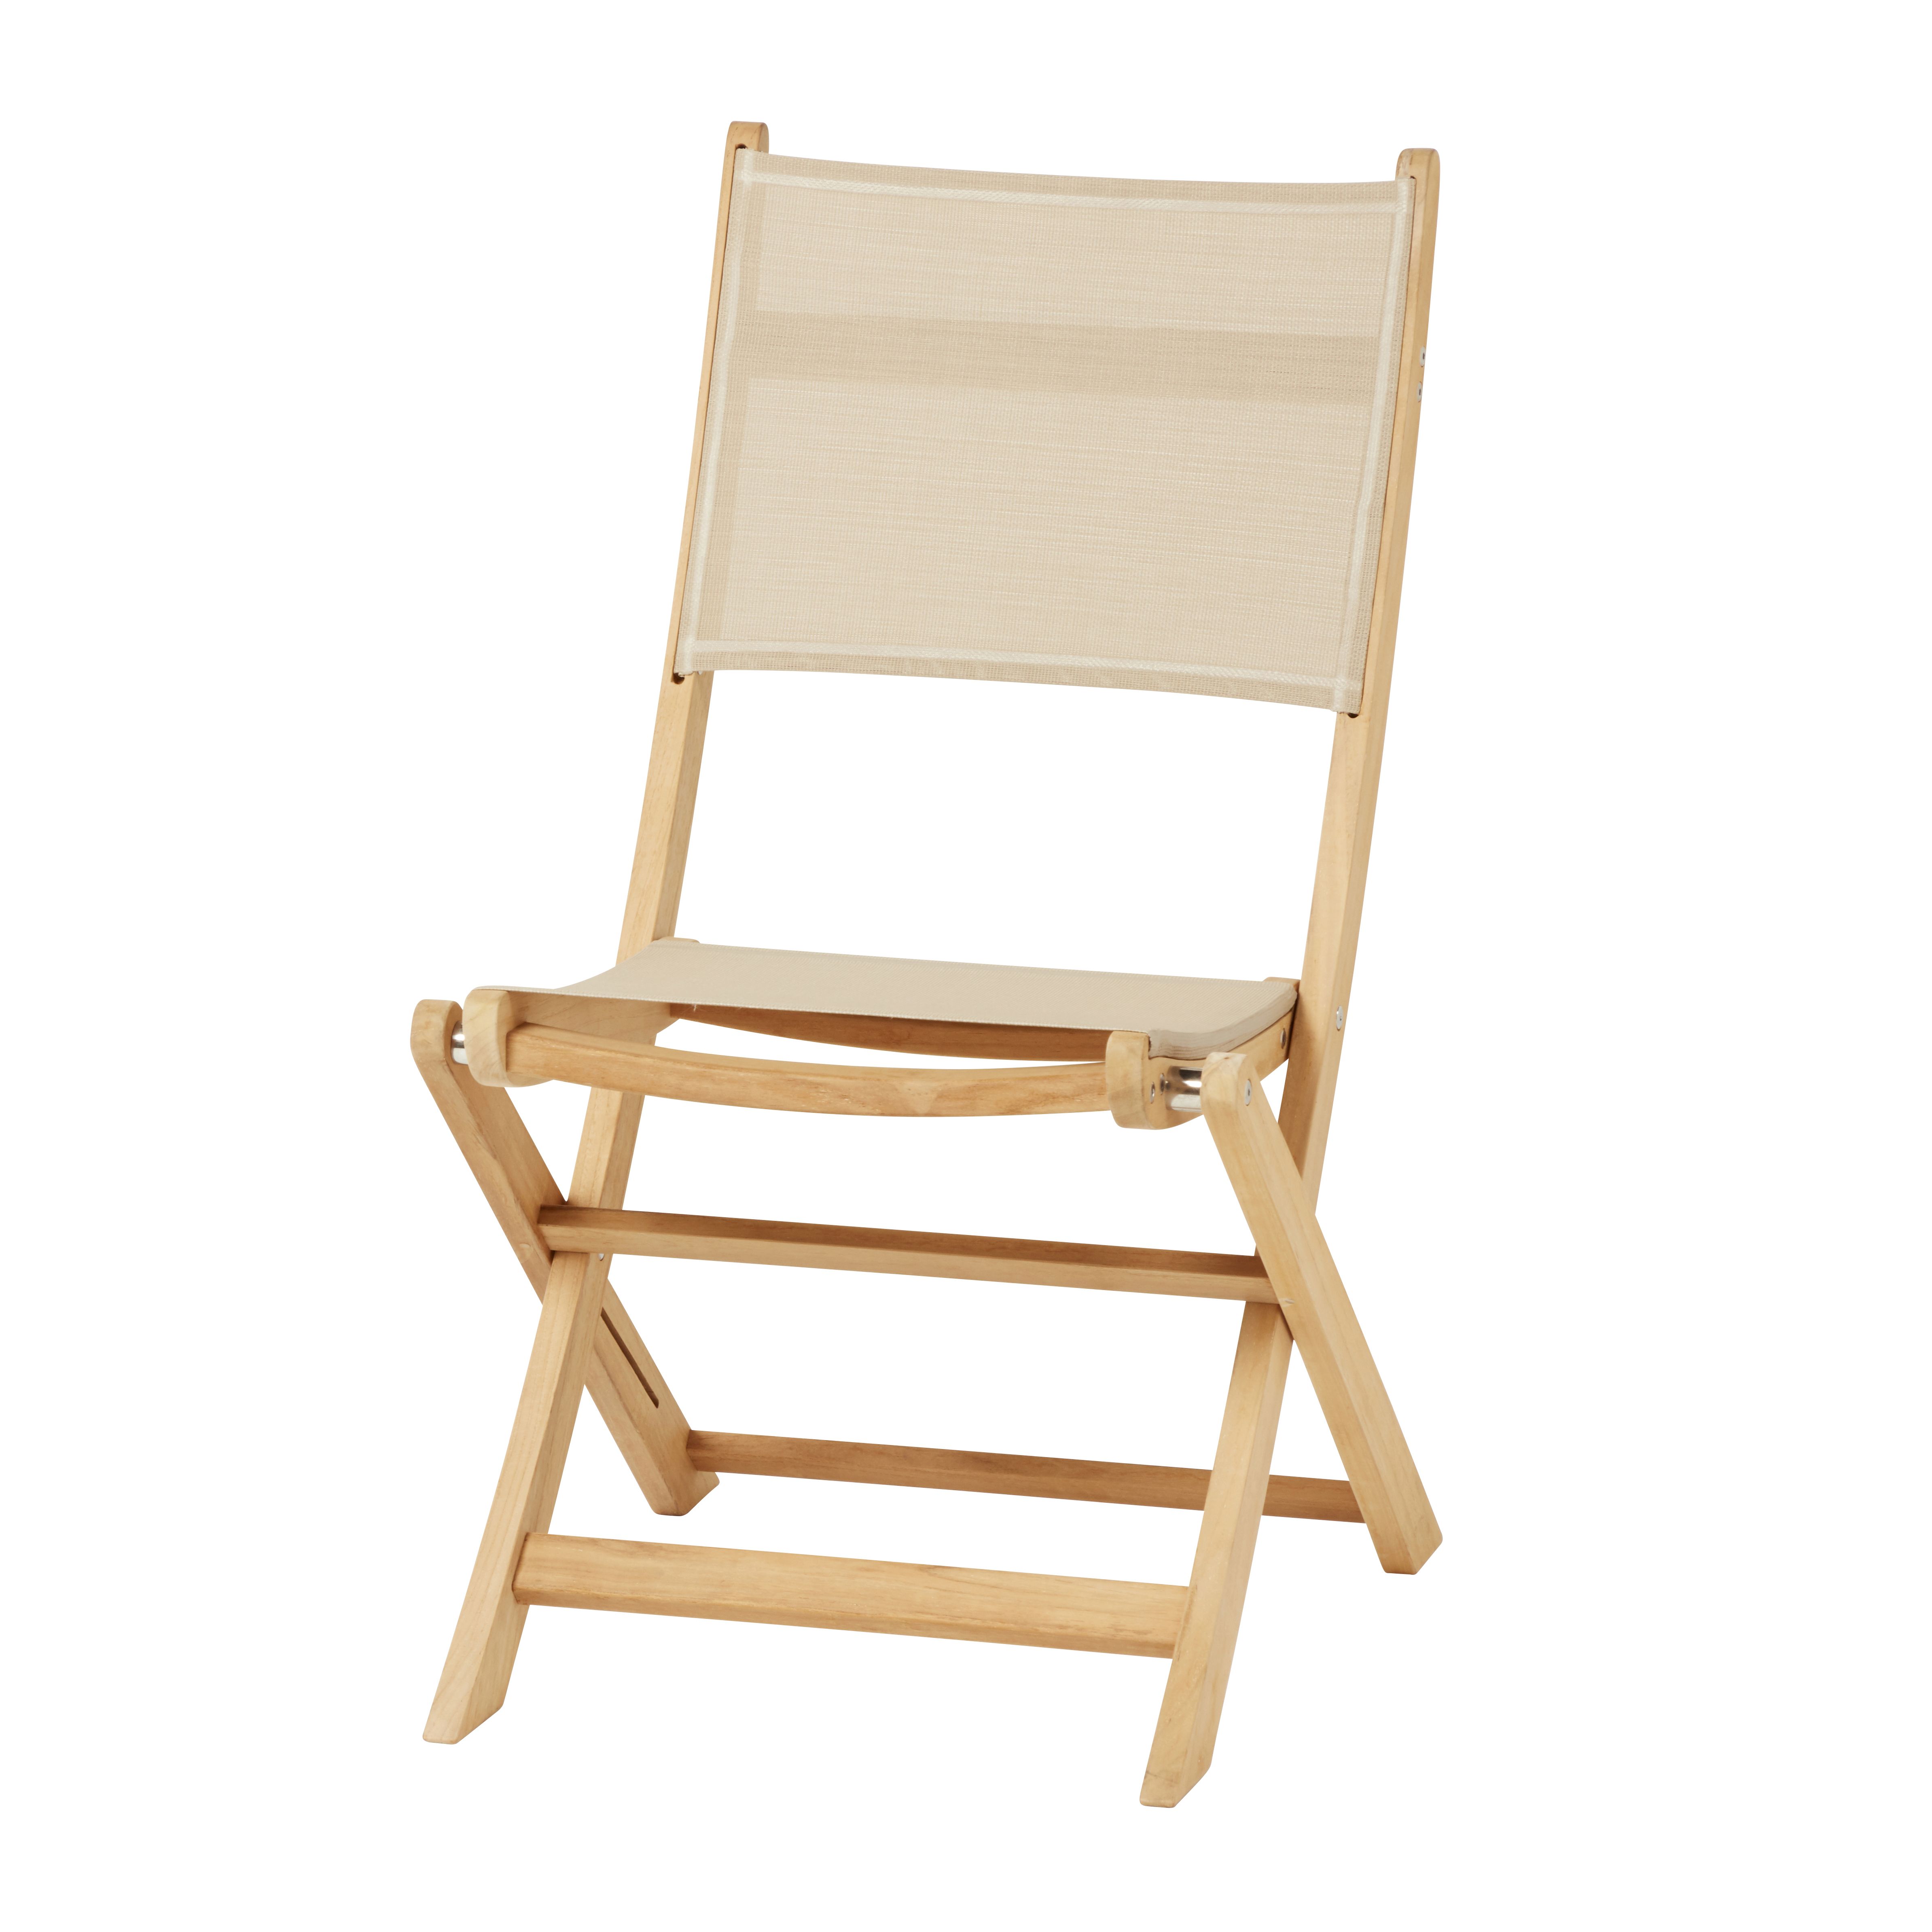 Molara Wooden Garden Chair, Pack of 2